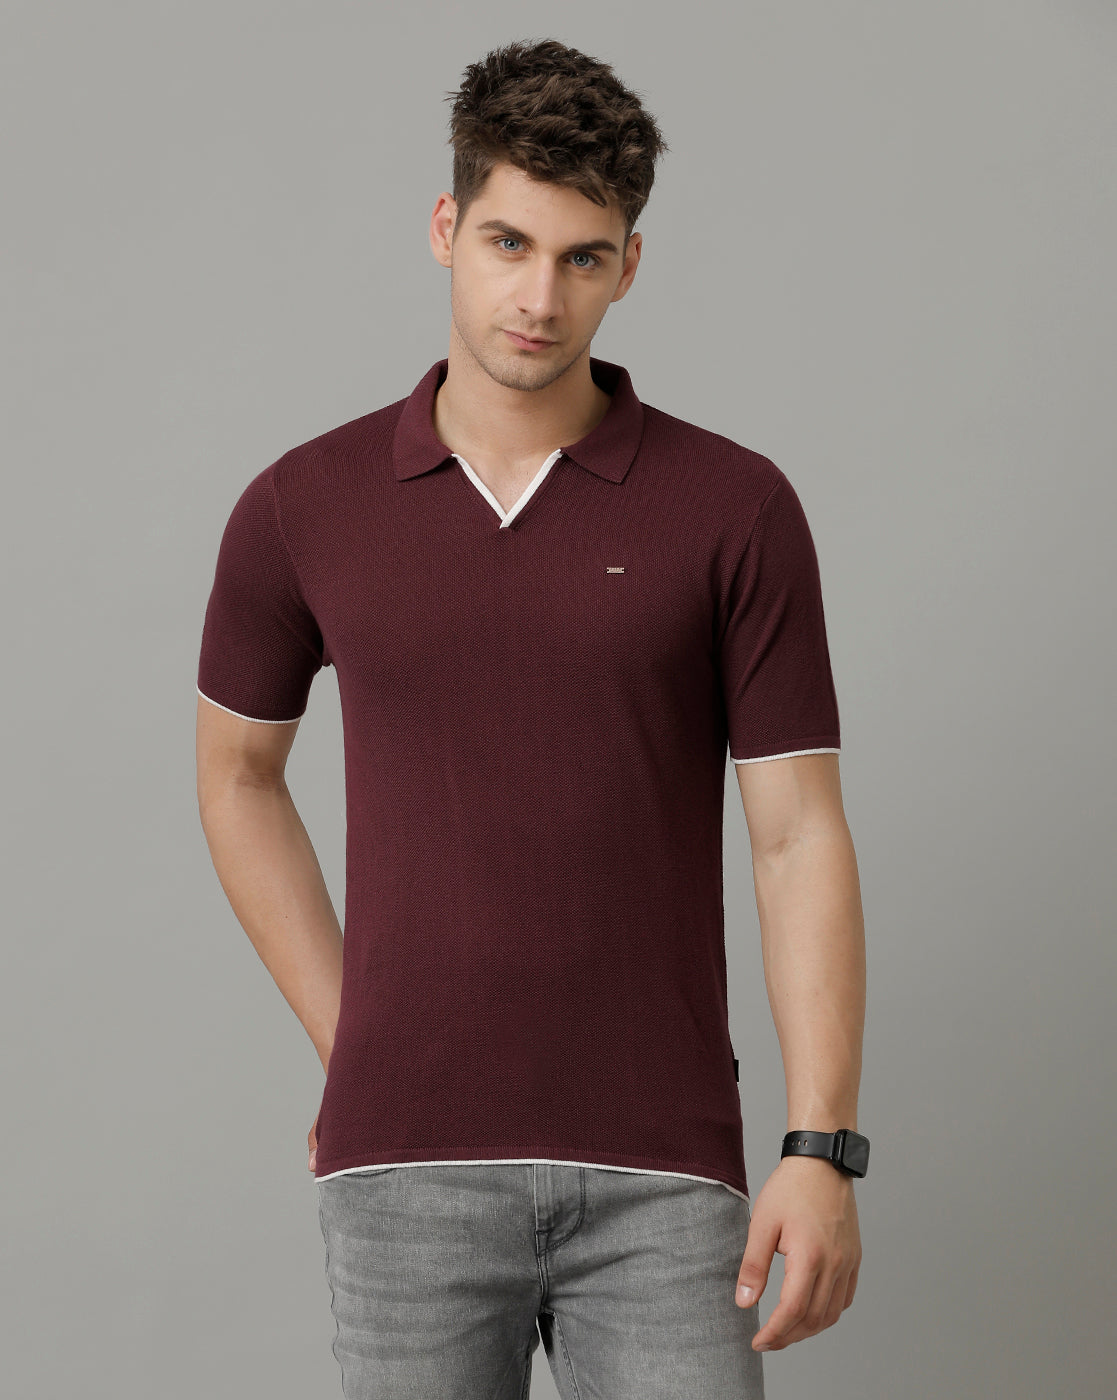 Identiti Purple Half Sleeve Solid Slim Fit Cotton Casual Polo T-Shirt For Men.